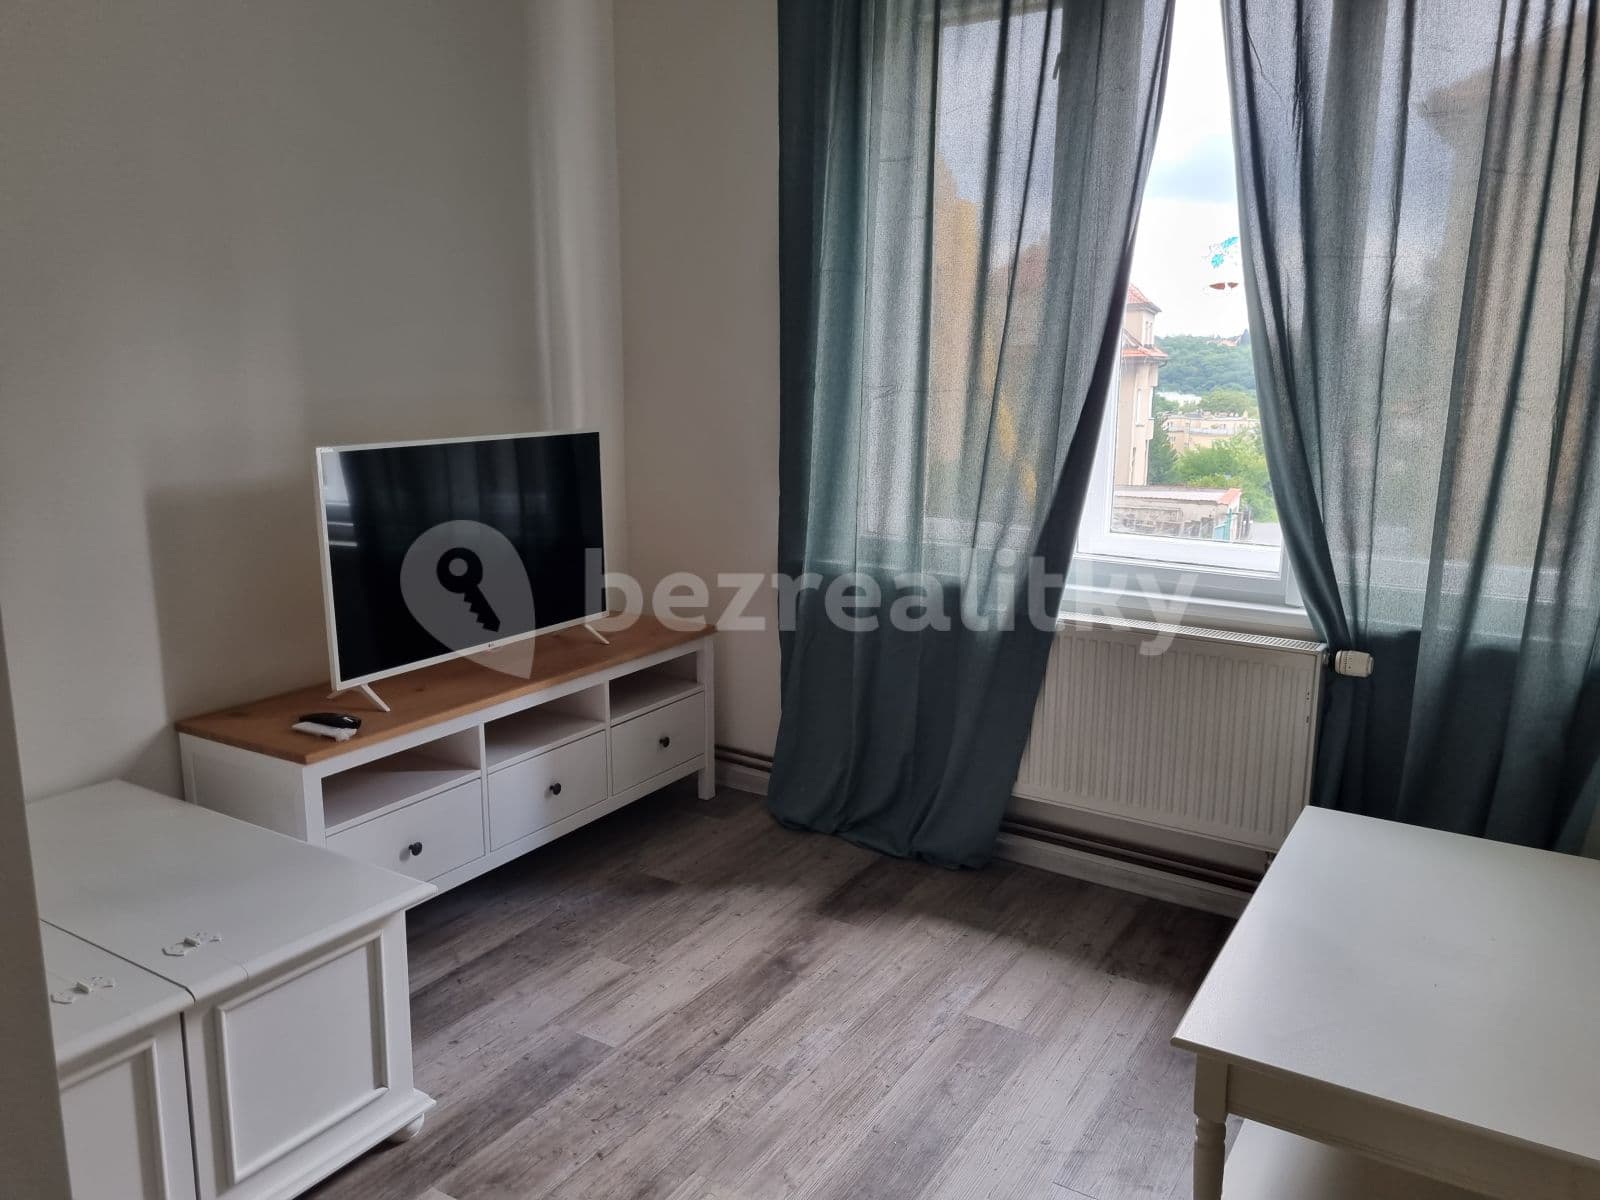 2 bedroom flat to rent, 76 m², Prague, Prague